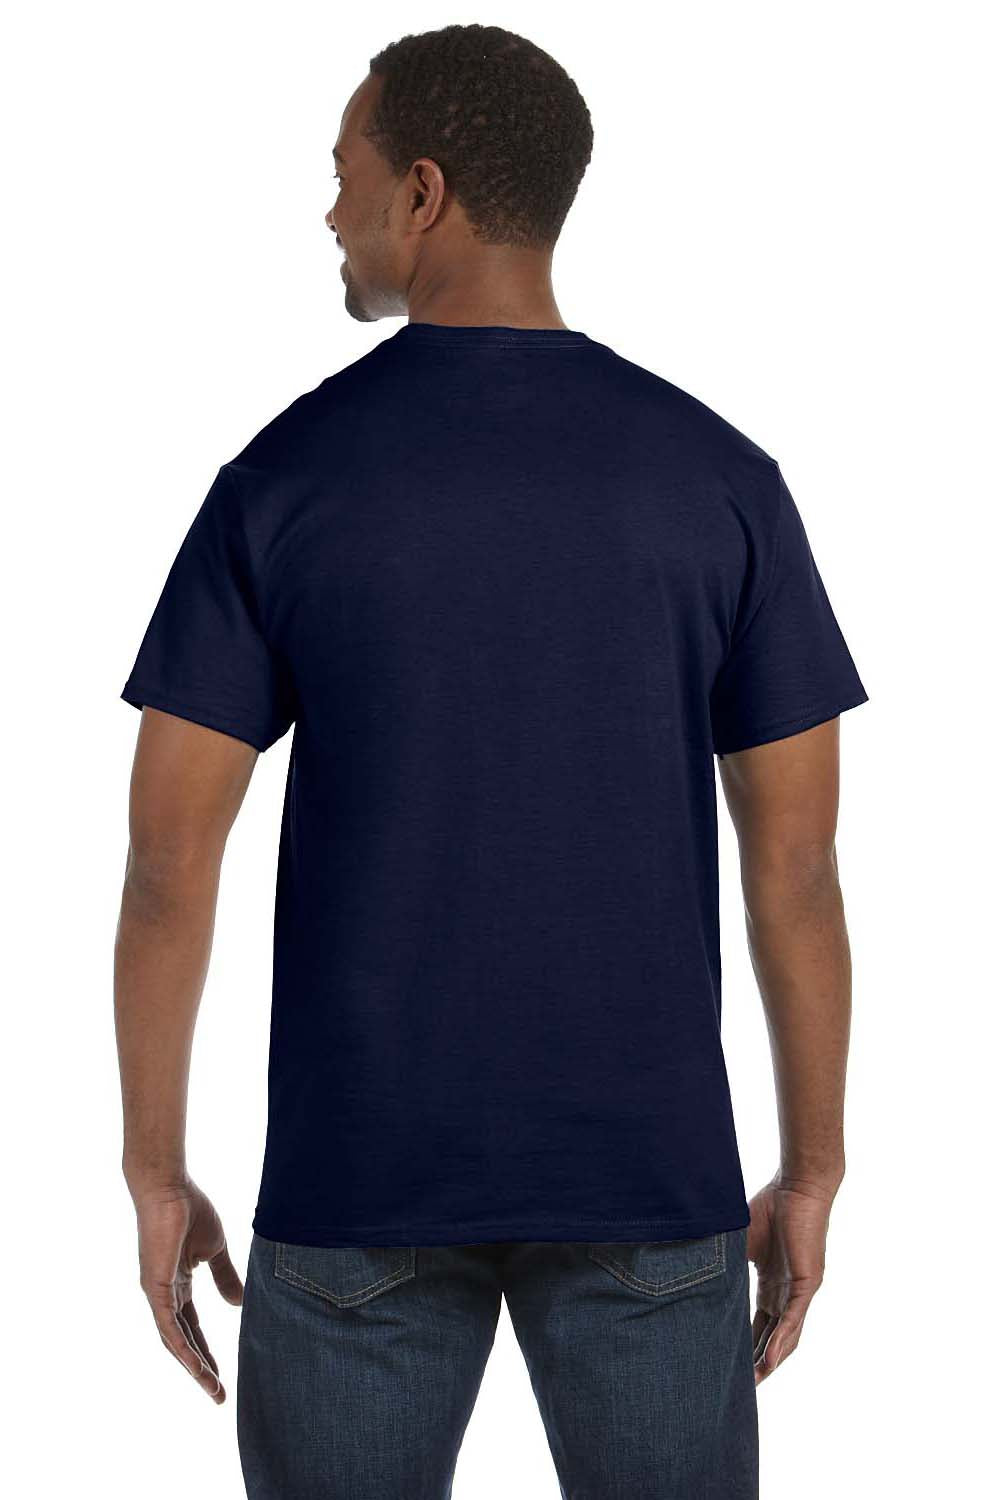 Hanes 5250T Mens ComfortSoft Short Sleeve Crewneck T-Shirt Navy Blue Back